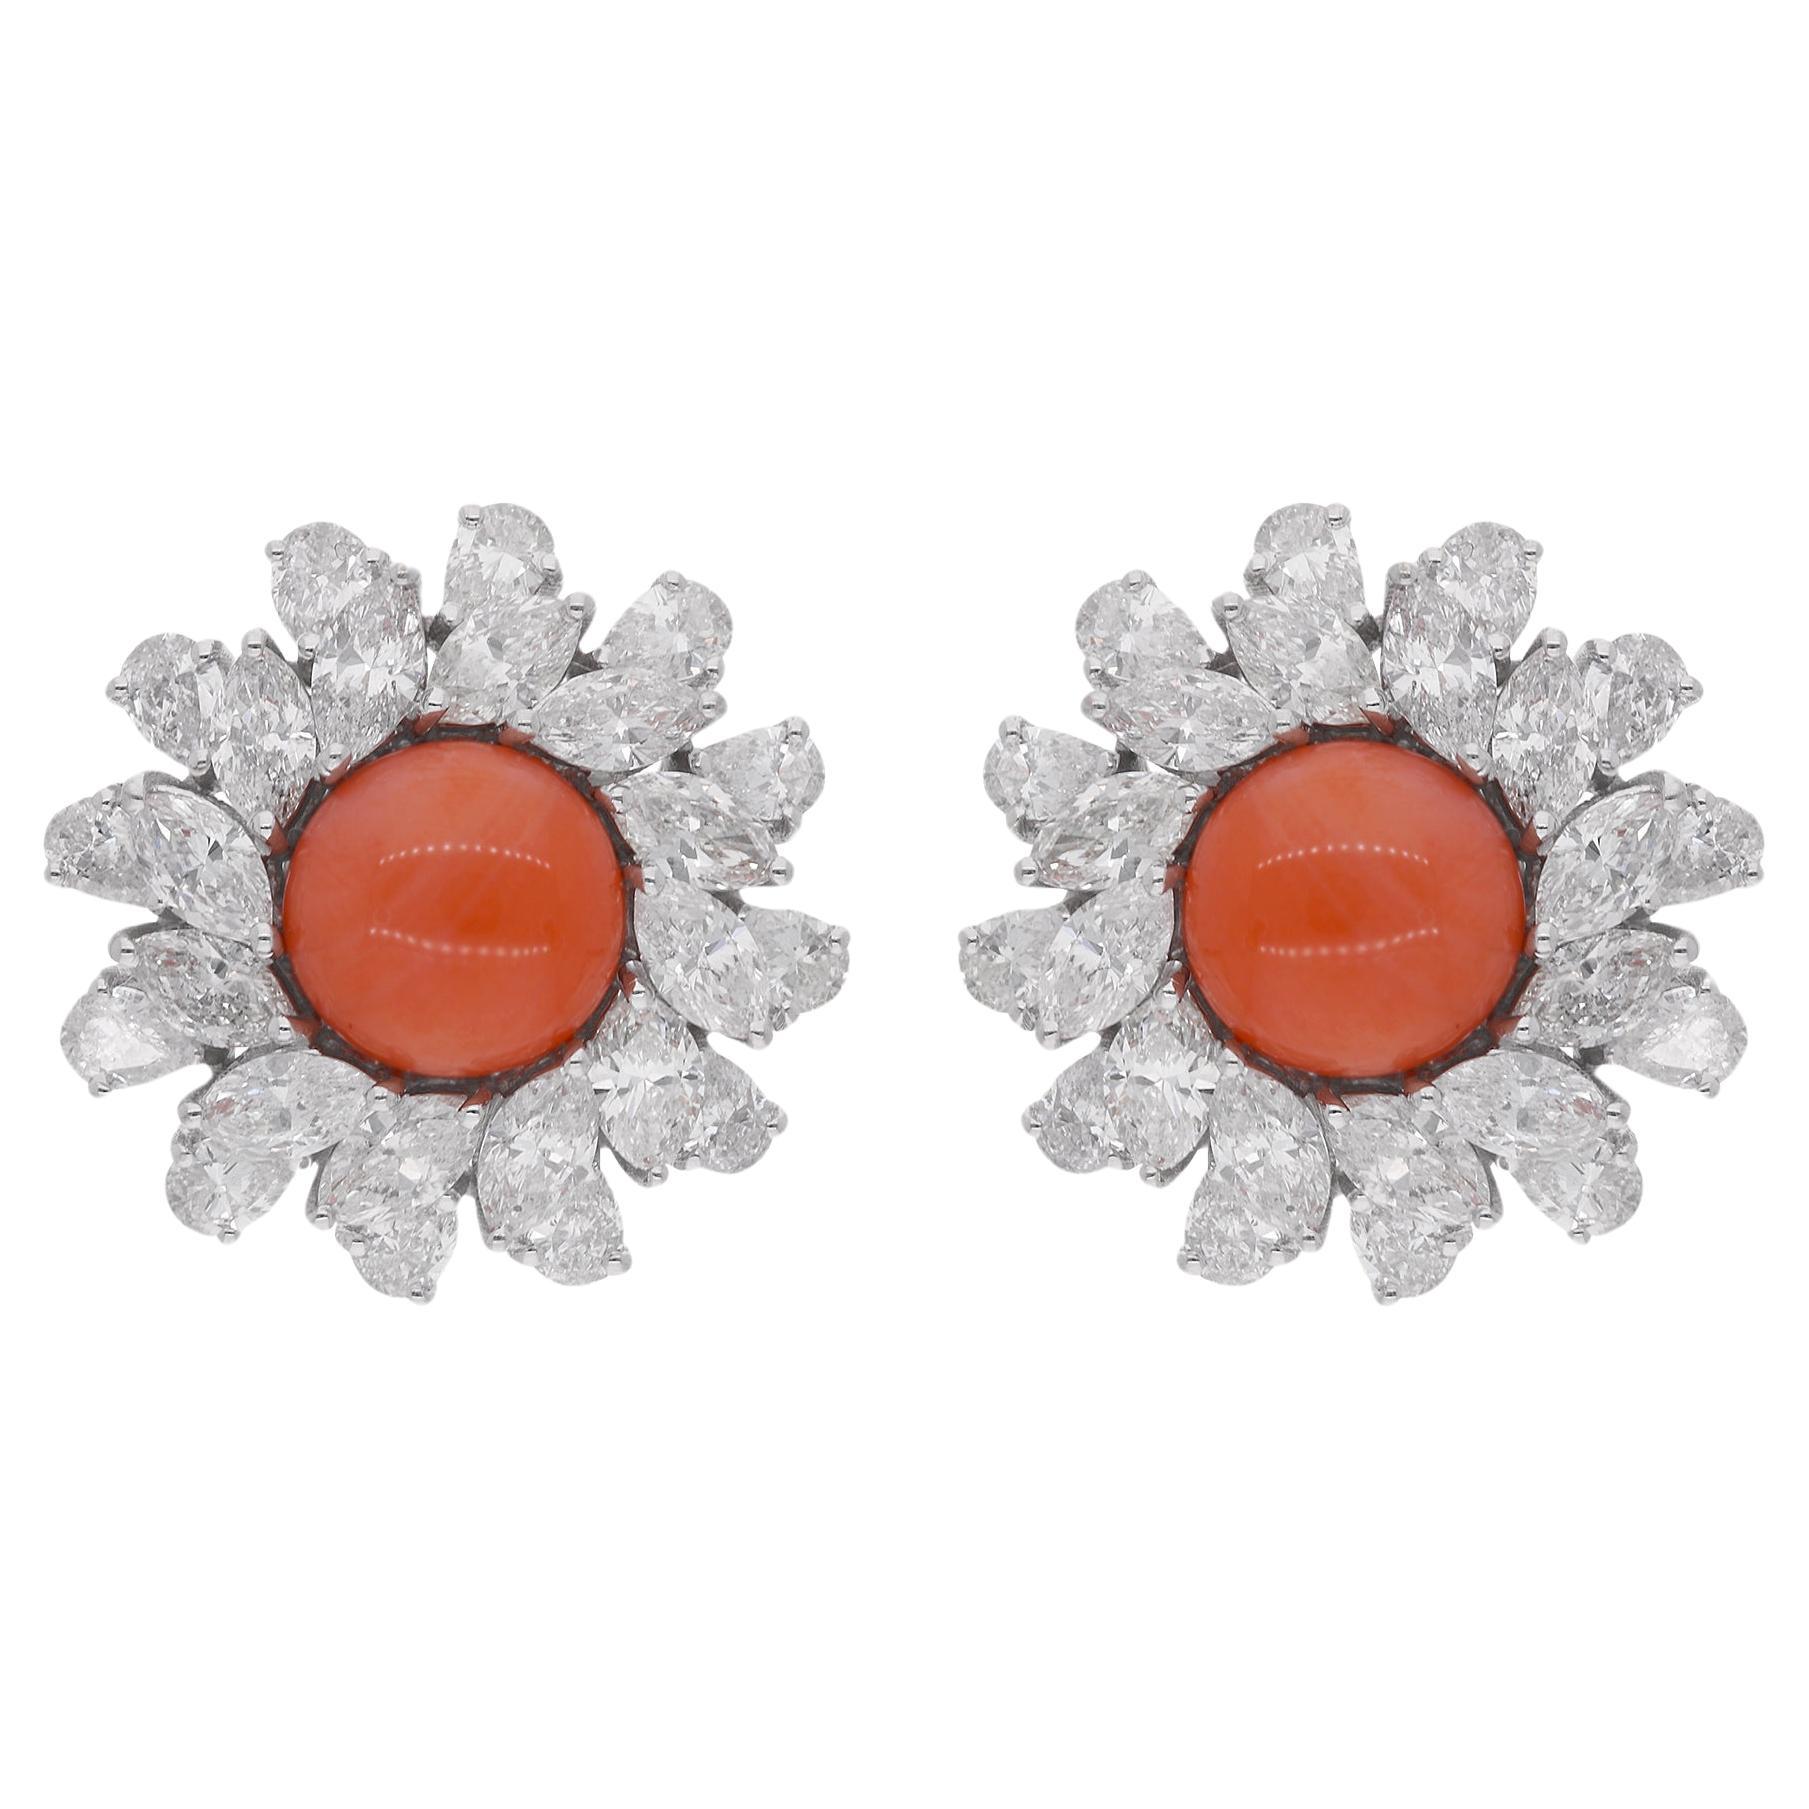 Coral Gemstone Flower Stud Earrings Diamond 18 Karat White Gold Handmade Jewelry